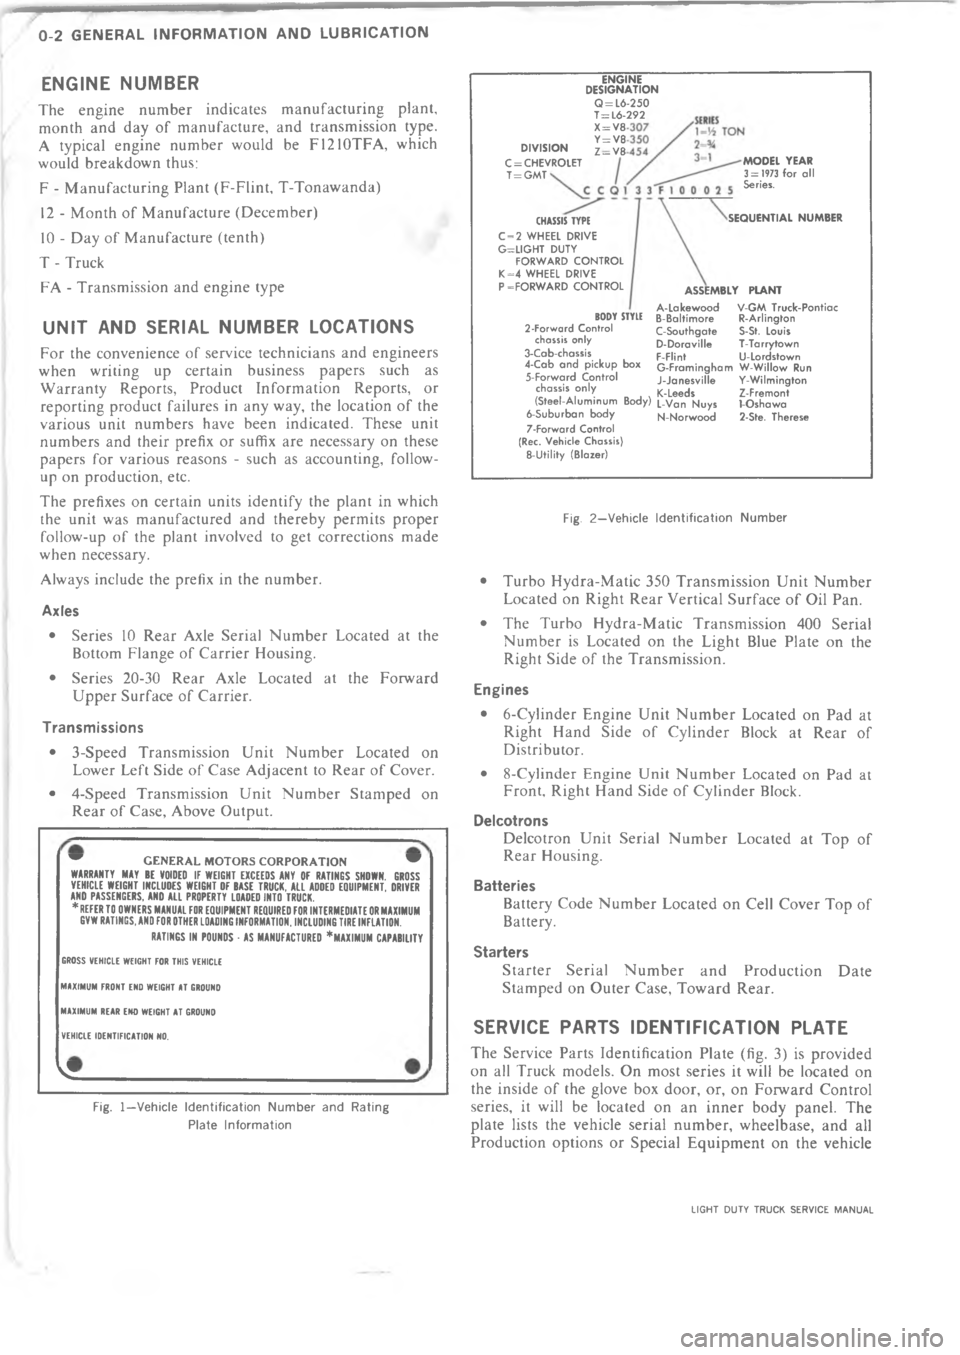 CHEVROLET LIGHT DUTY TRUCK 1973  Service Manual   4                                

"

4
.
5


"
5

5
.
;





"


.
4
1&%
D
B
D


D

D
,
5



;









<
	

:

